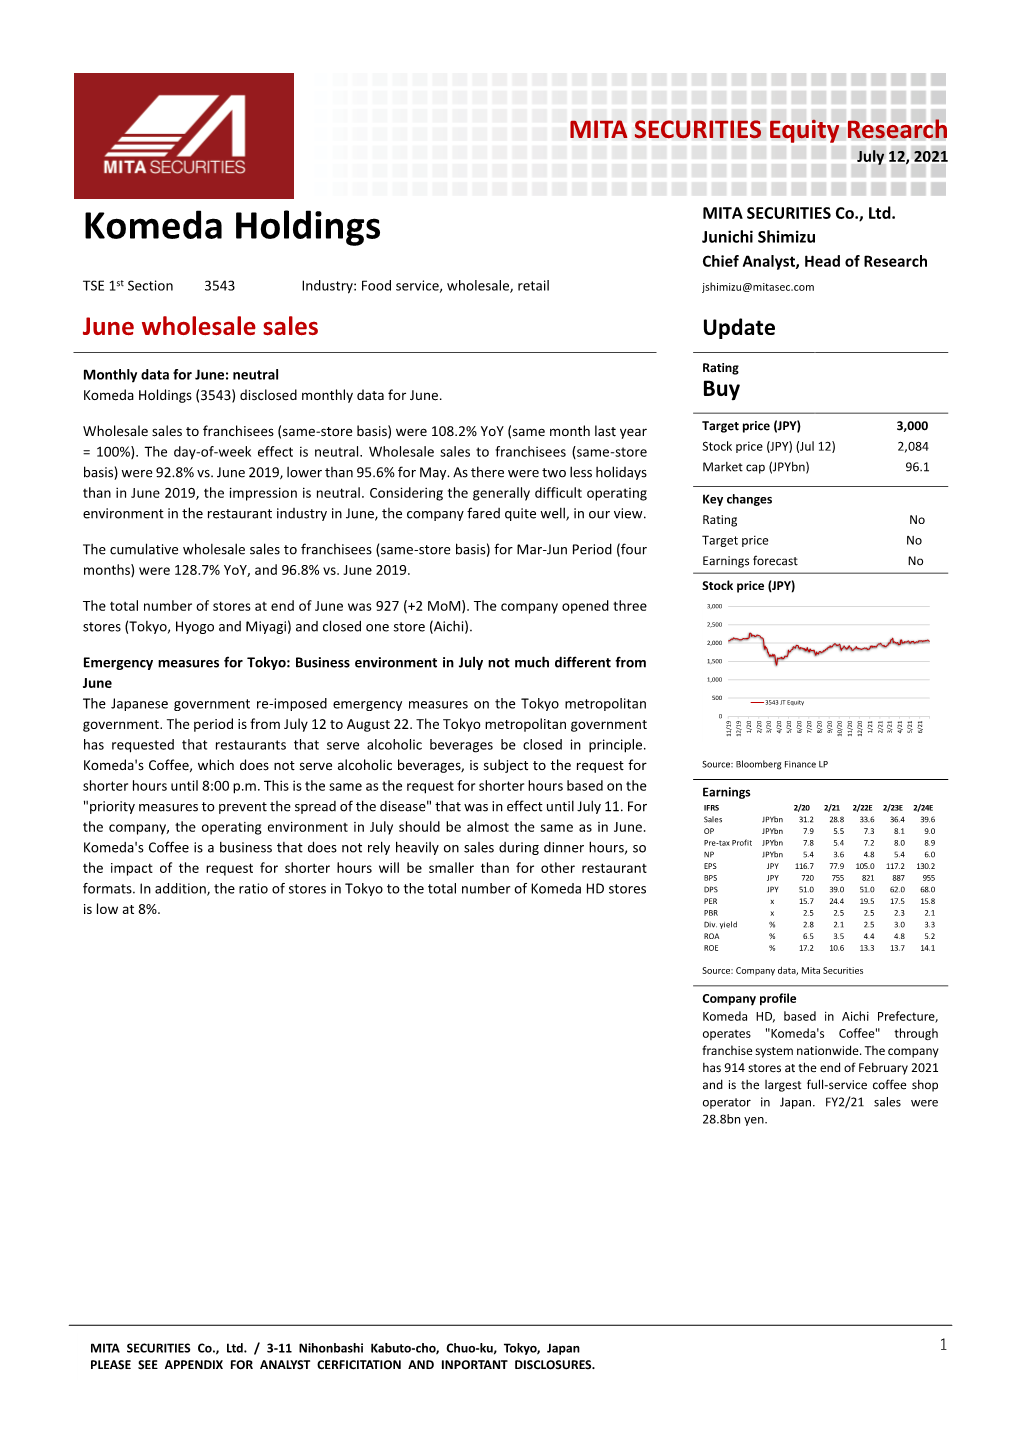 Komeda Holdings Junichi Shimizu Chief Analyst, Head of Research TSE 1St Section 3543 Industry: Food Service, Wholesale, Retail Jshimizu@Mitasec.Com